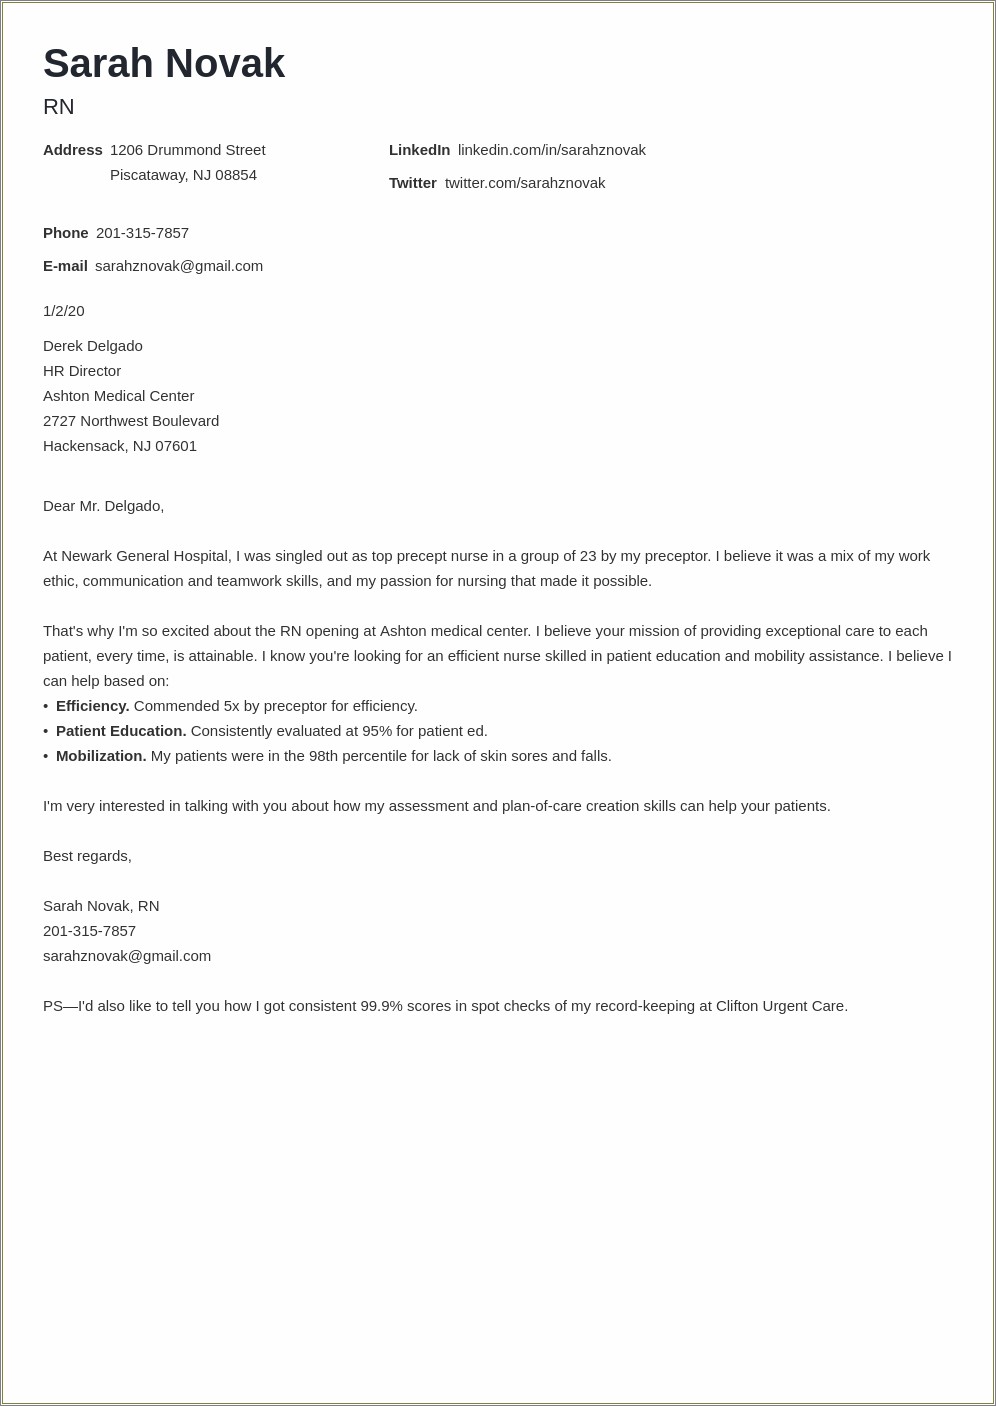 Resume And Application Letter For Ojt